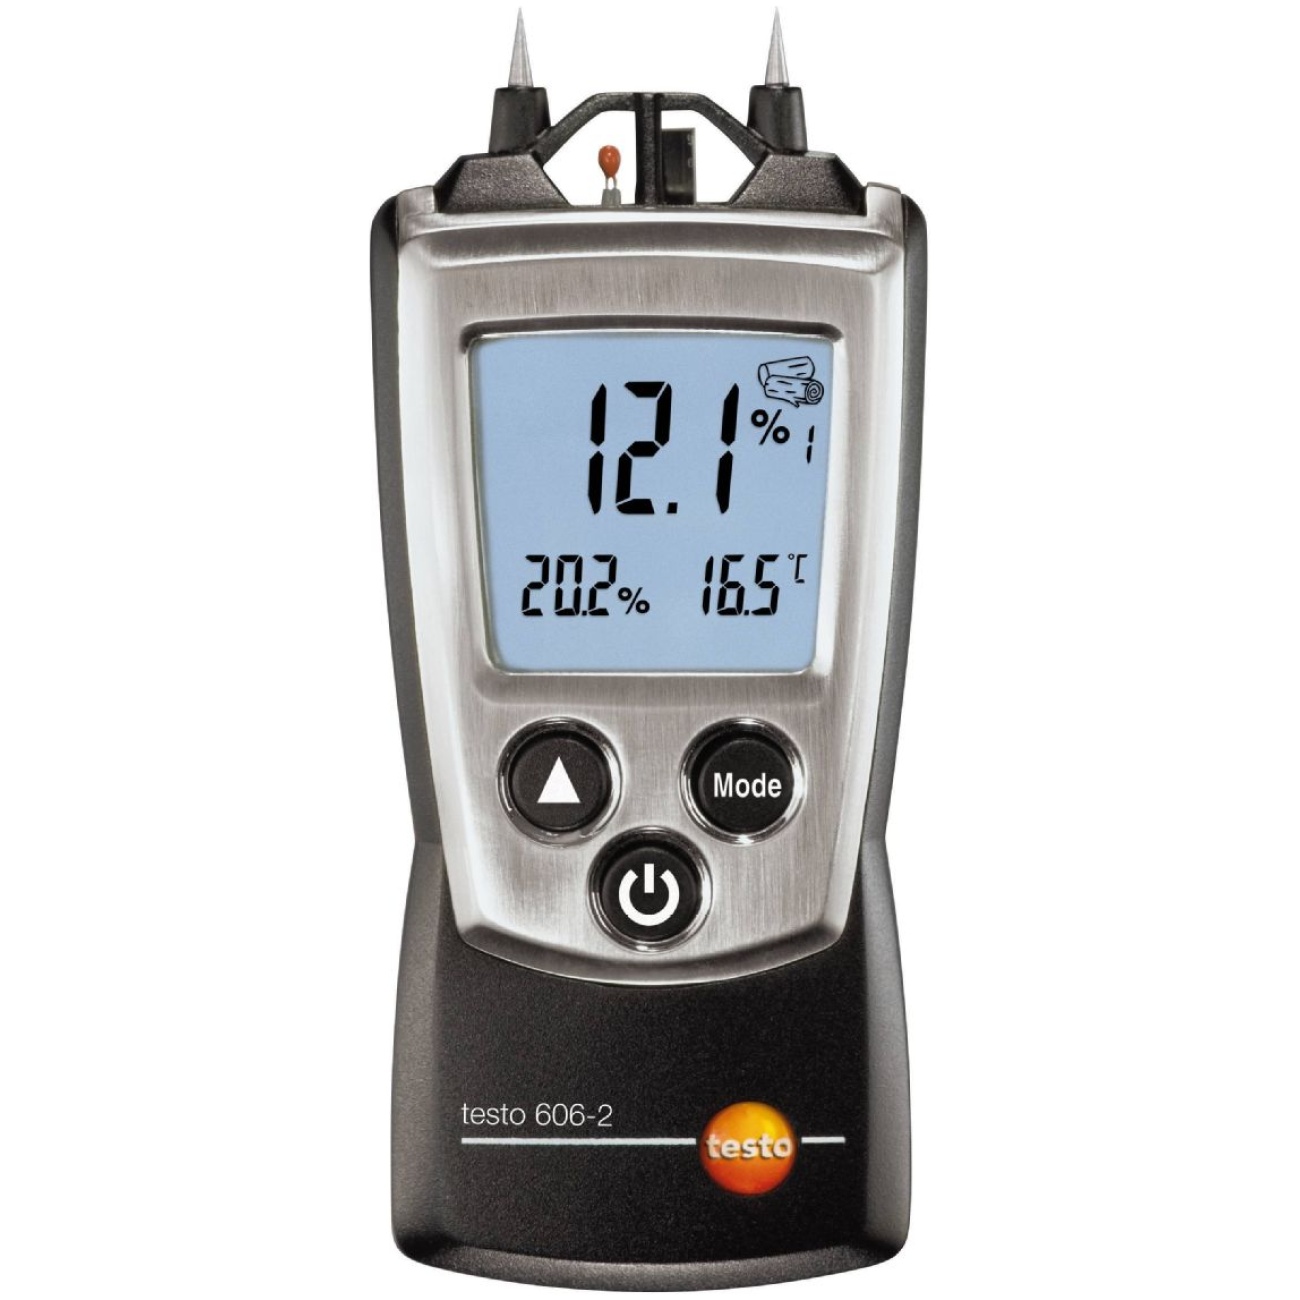 Wilgotnościomierz, wilgotność materiału / temperatura / wilgotność powietrza testo 606-2 - TESTO